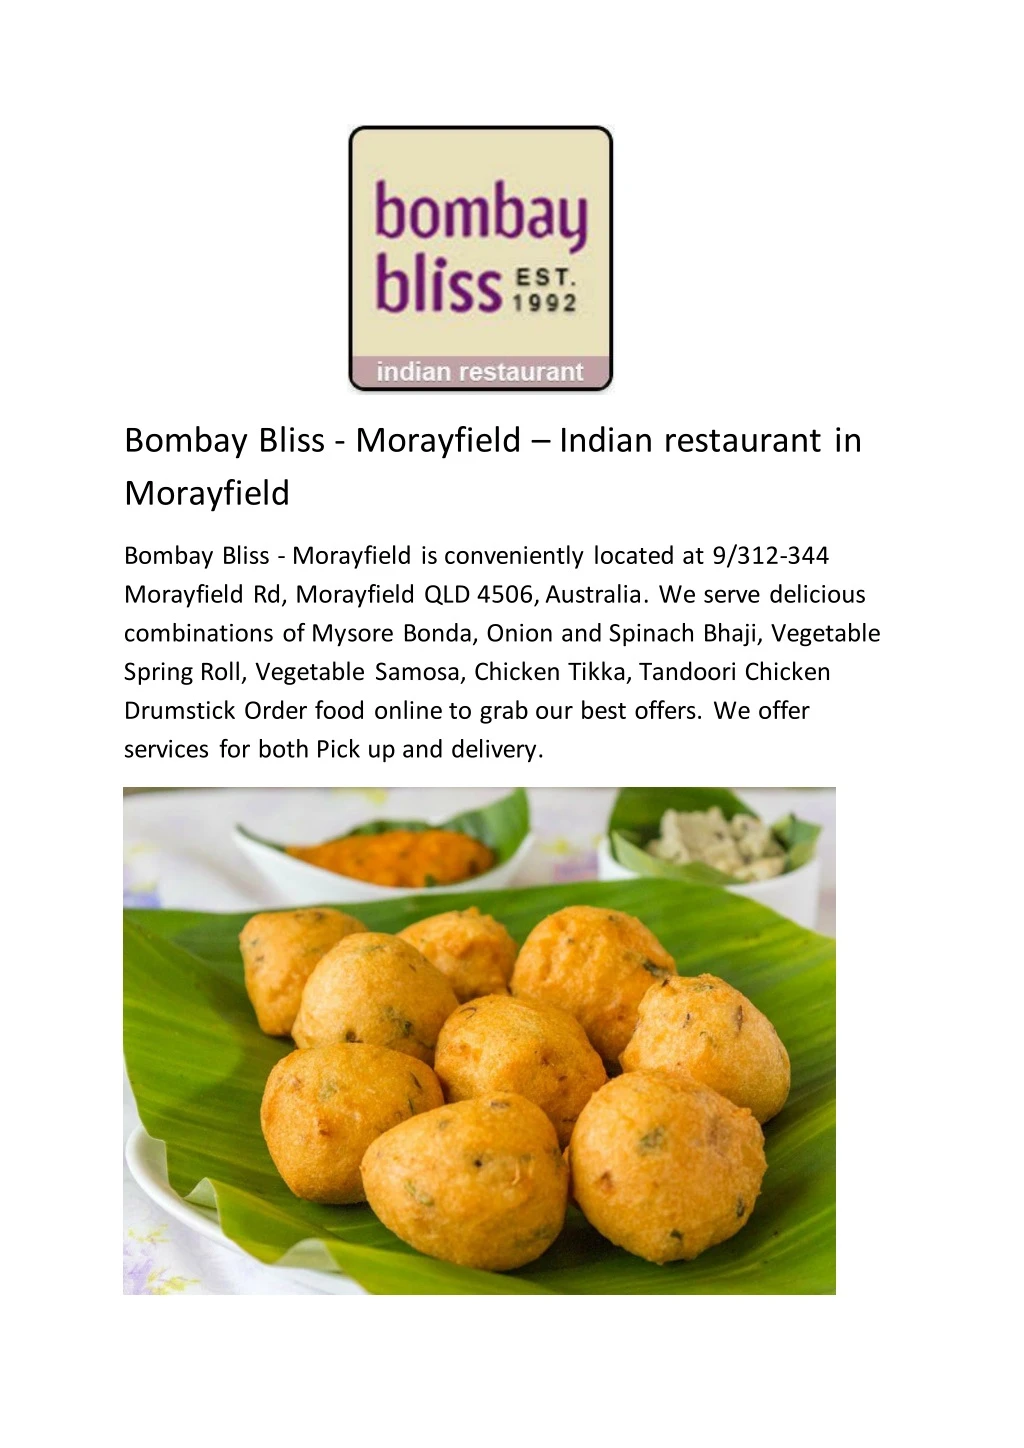 bombay bliss morayfield indian restaurant